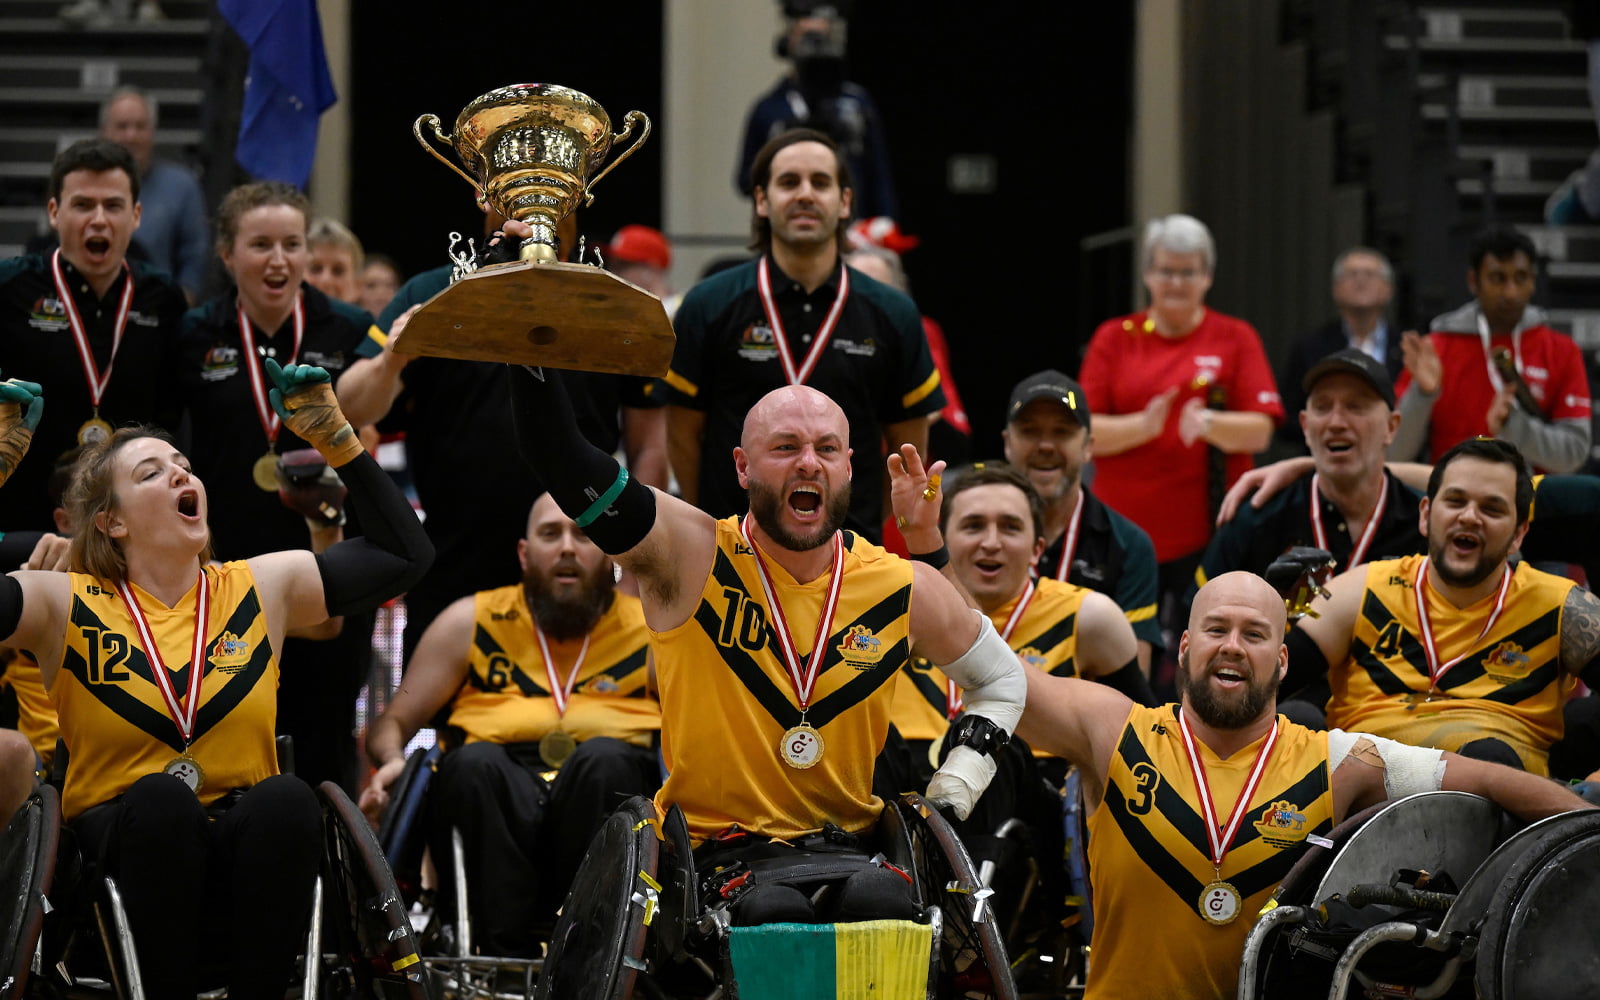 Wheelchair Rugby World Championship 2022